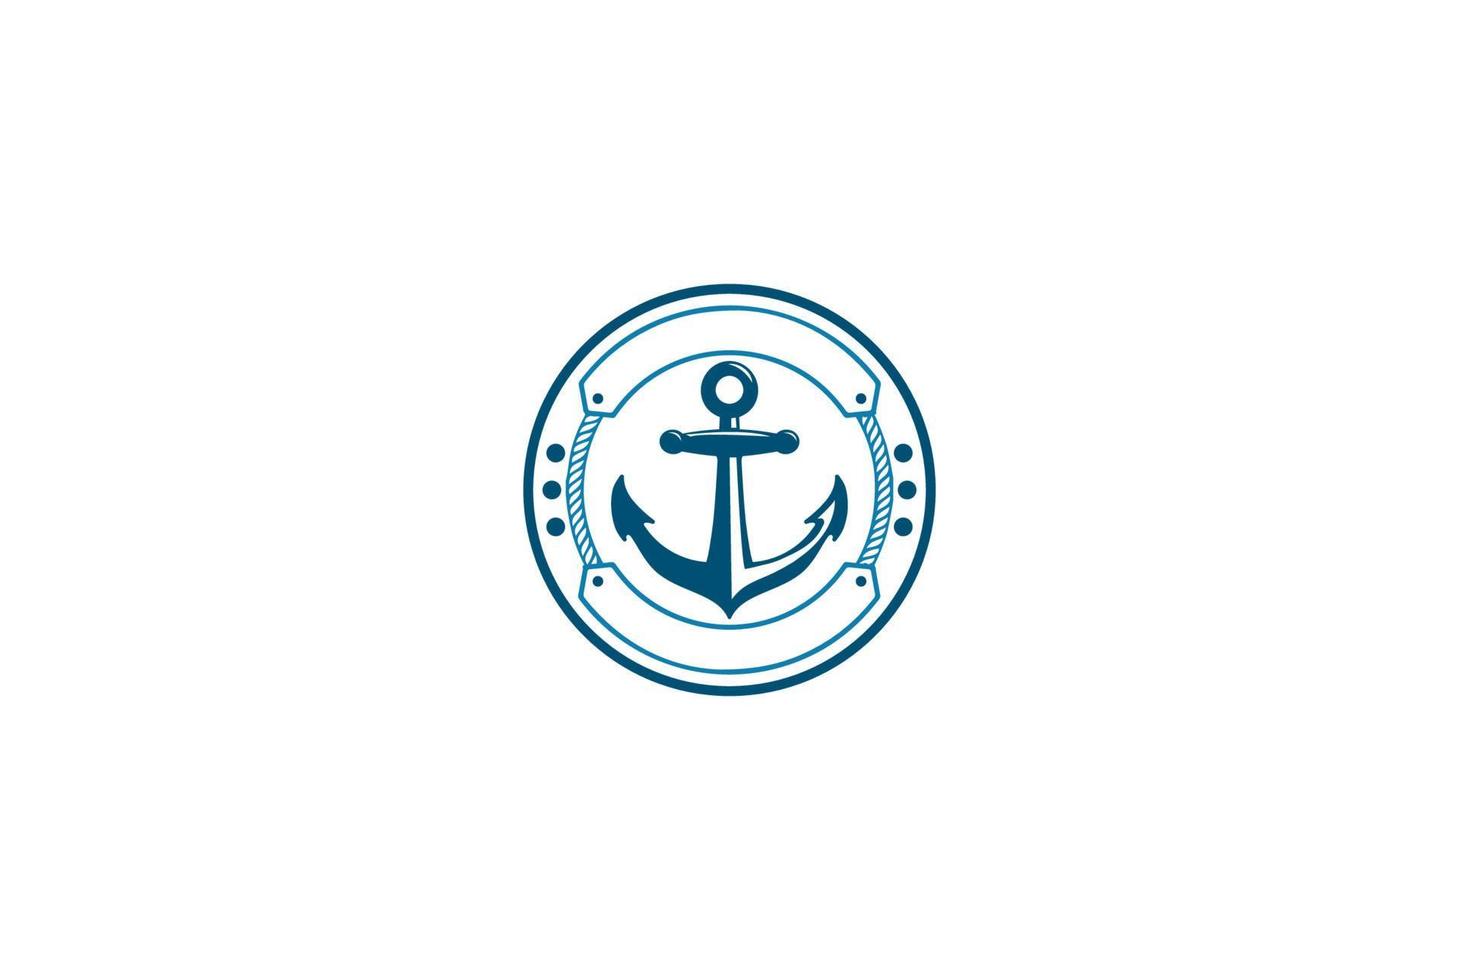 Vintage Circular Anchor Badge Label Seal Sticker for Nautical Marine Transportation Logo Design Vector